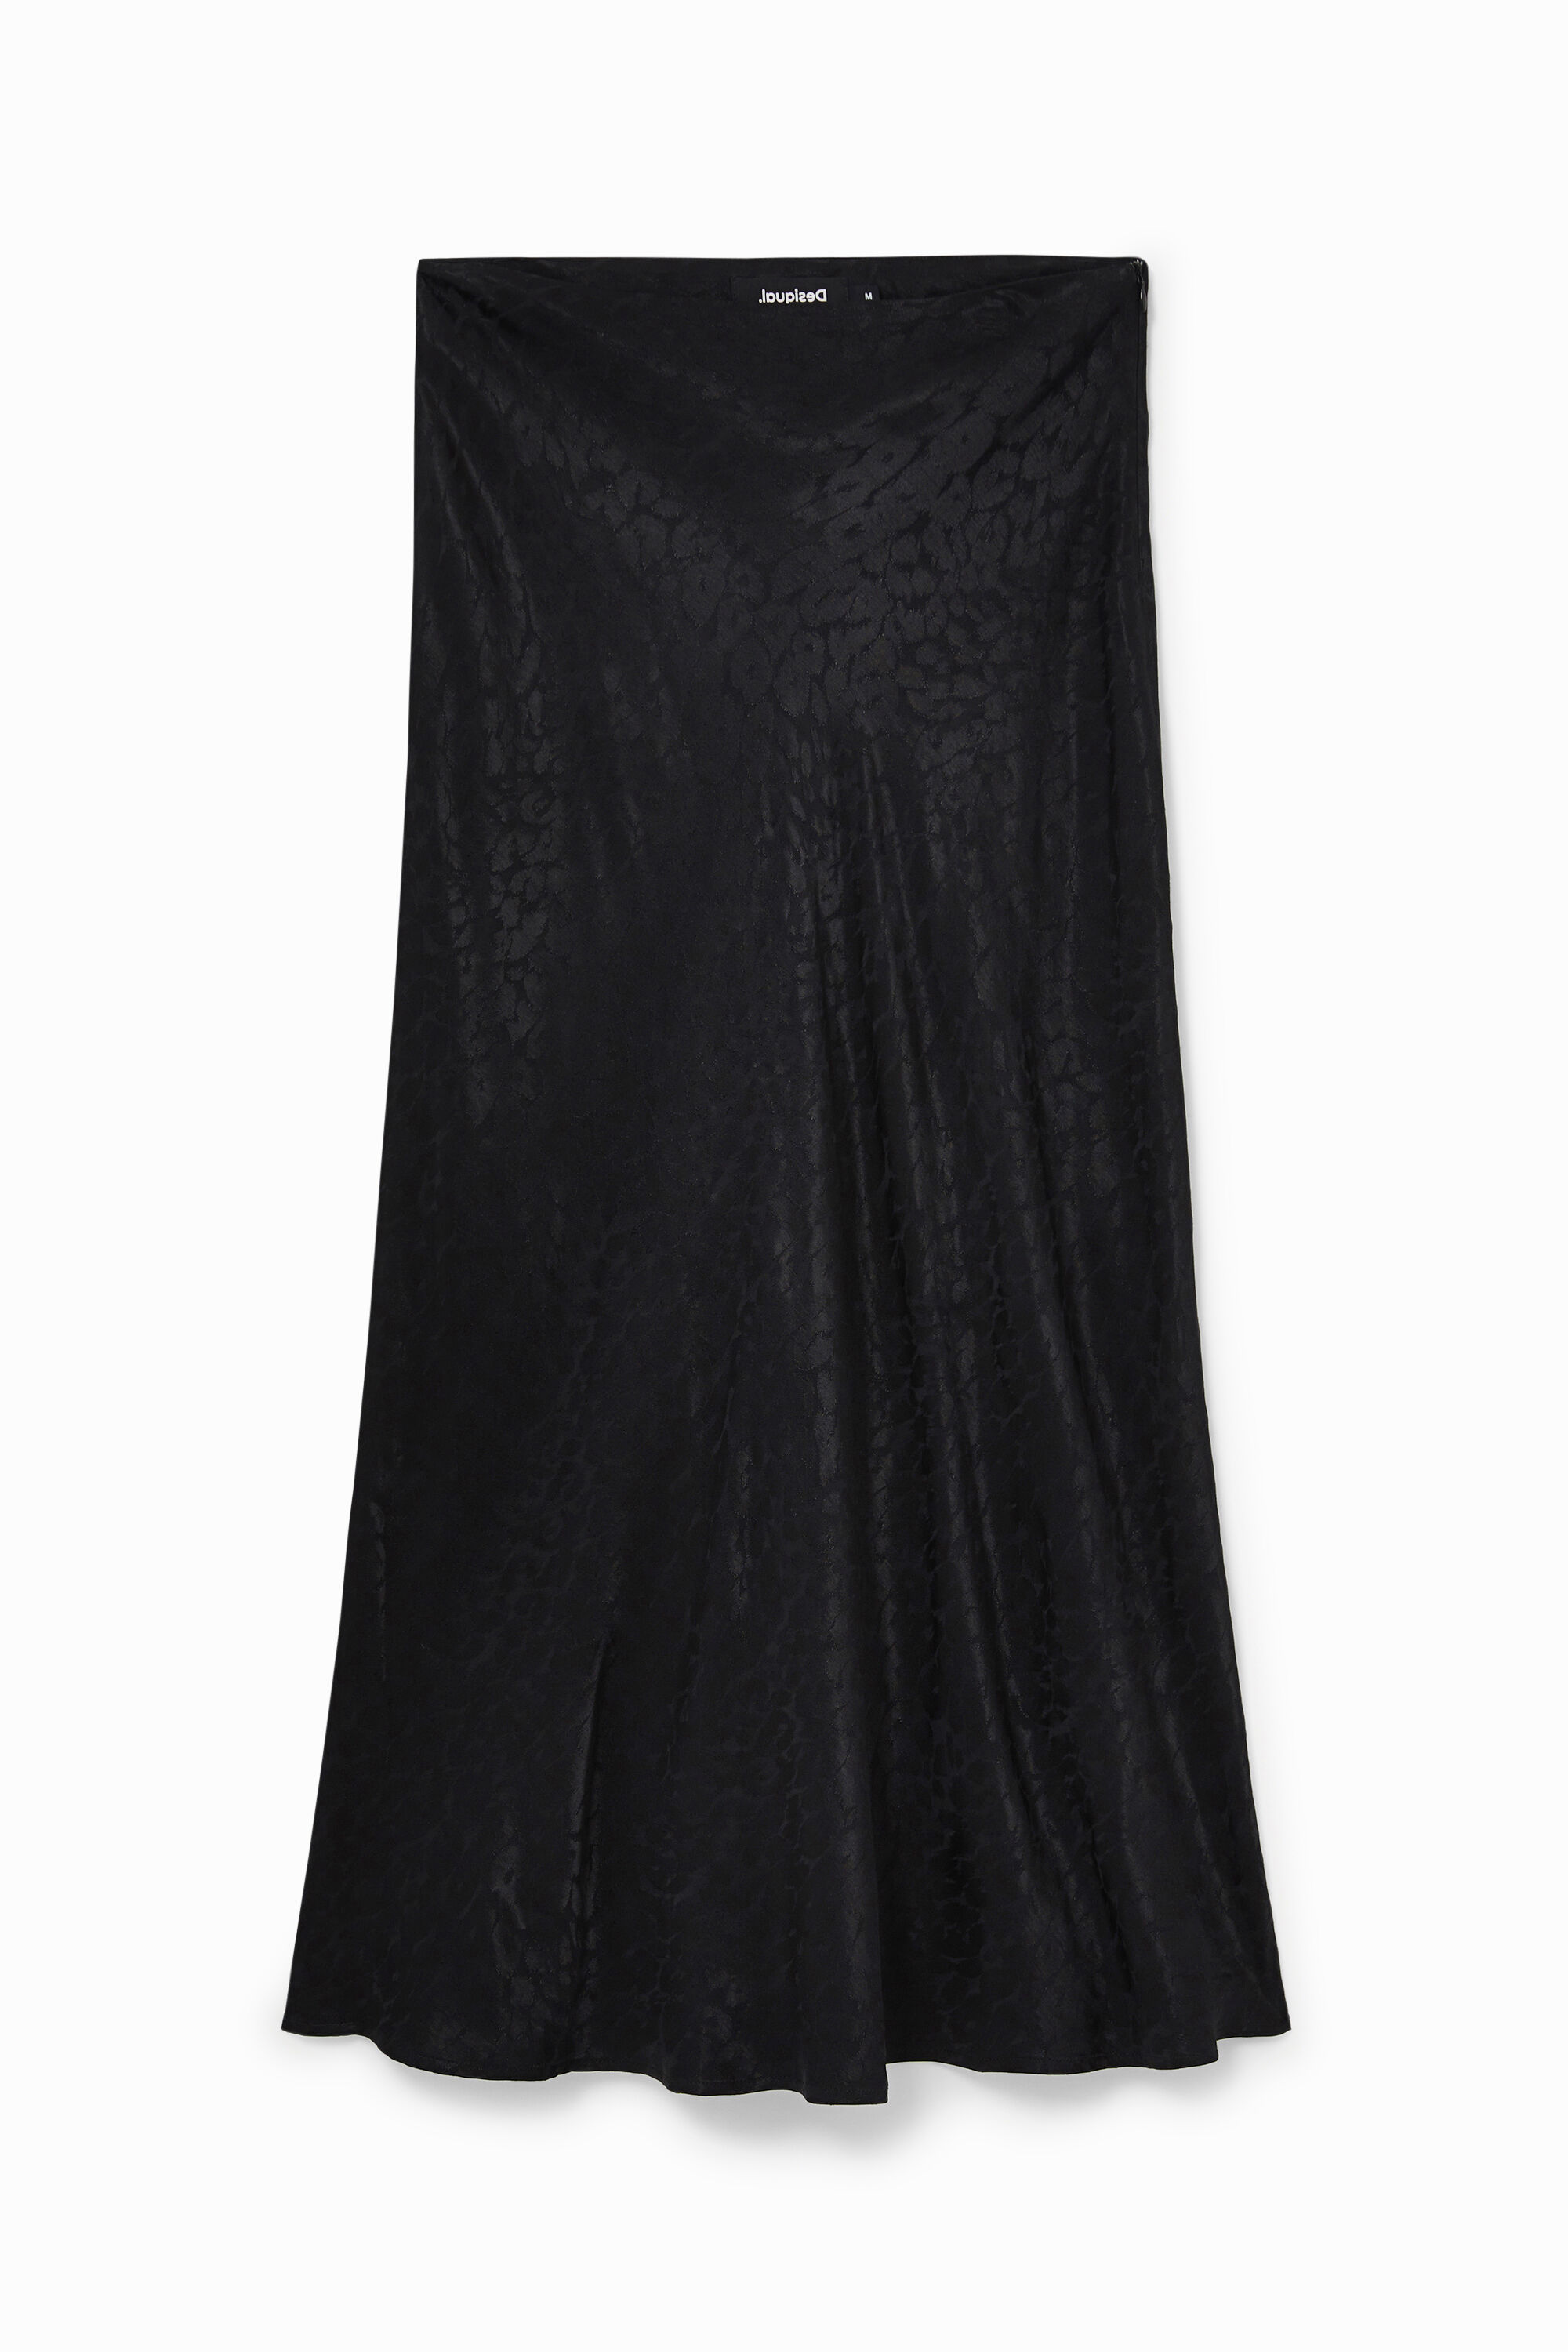 Textured motif midi skirt - BLACK - S